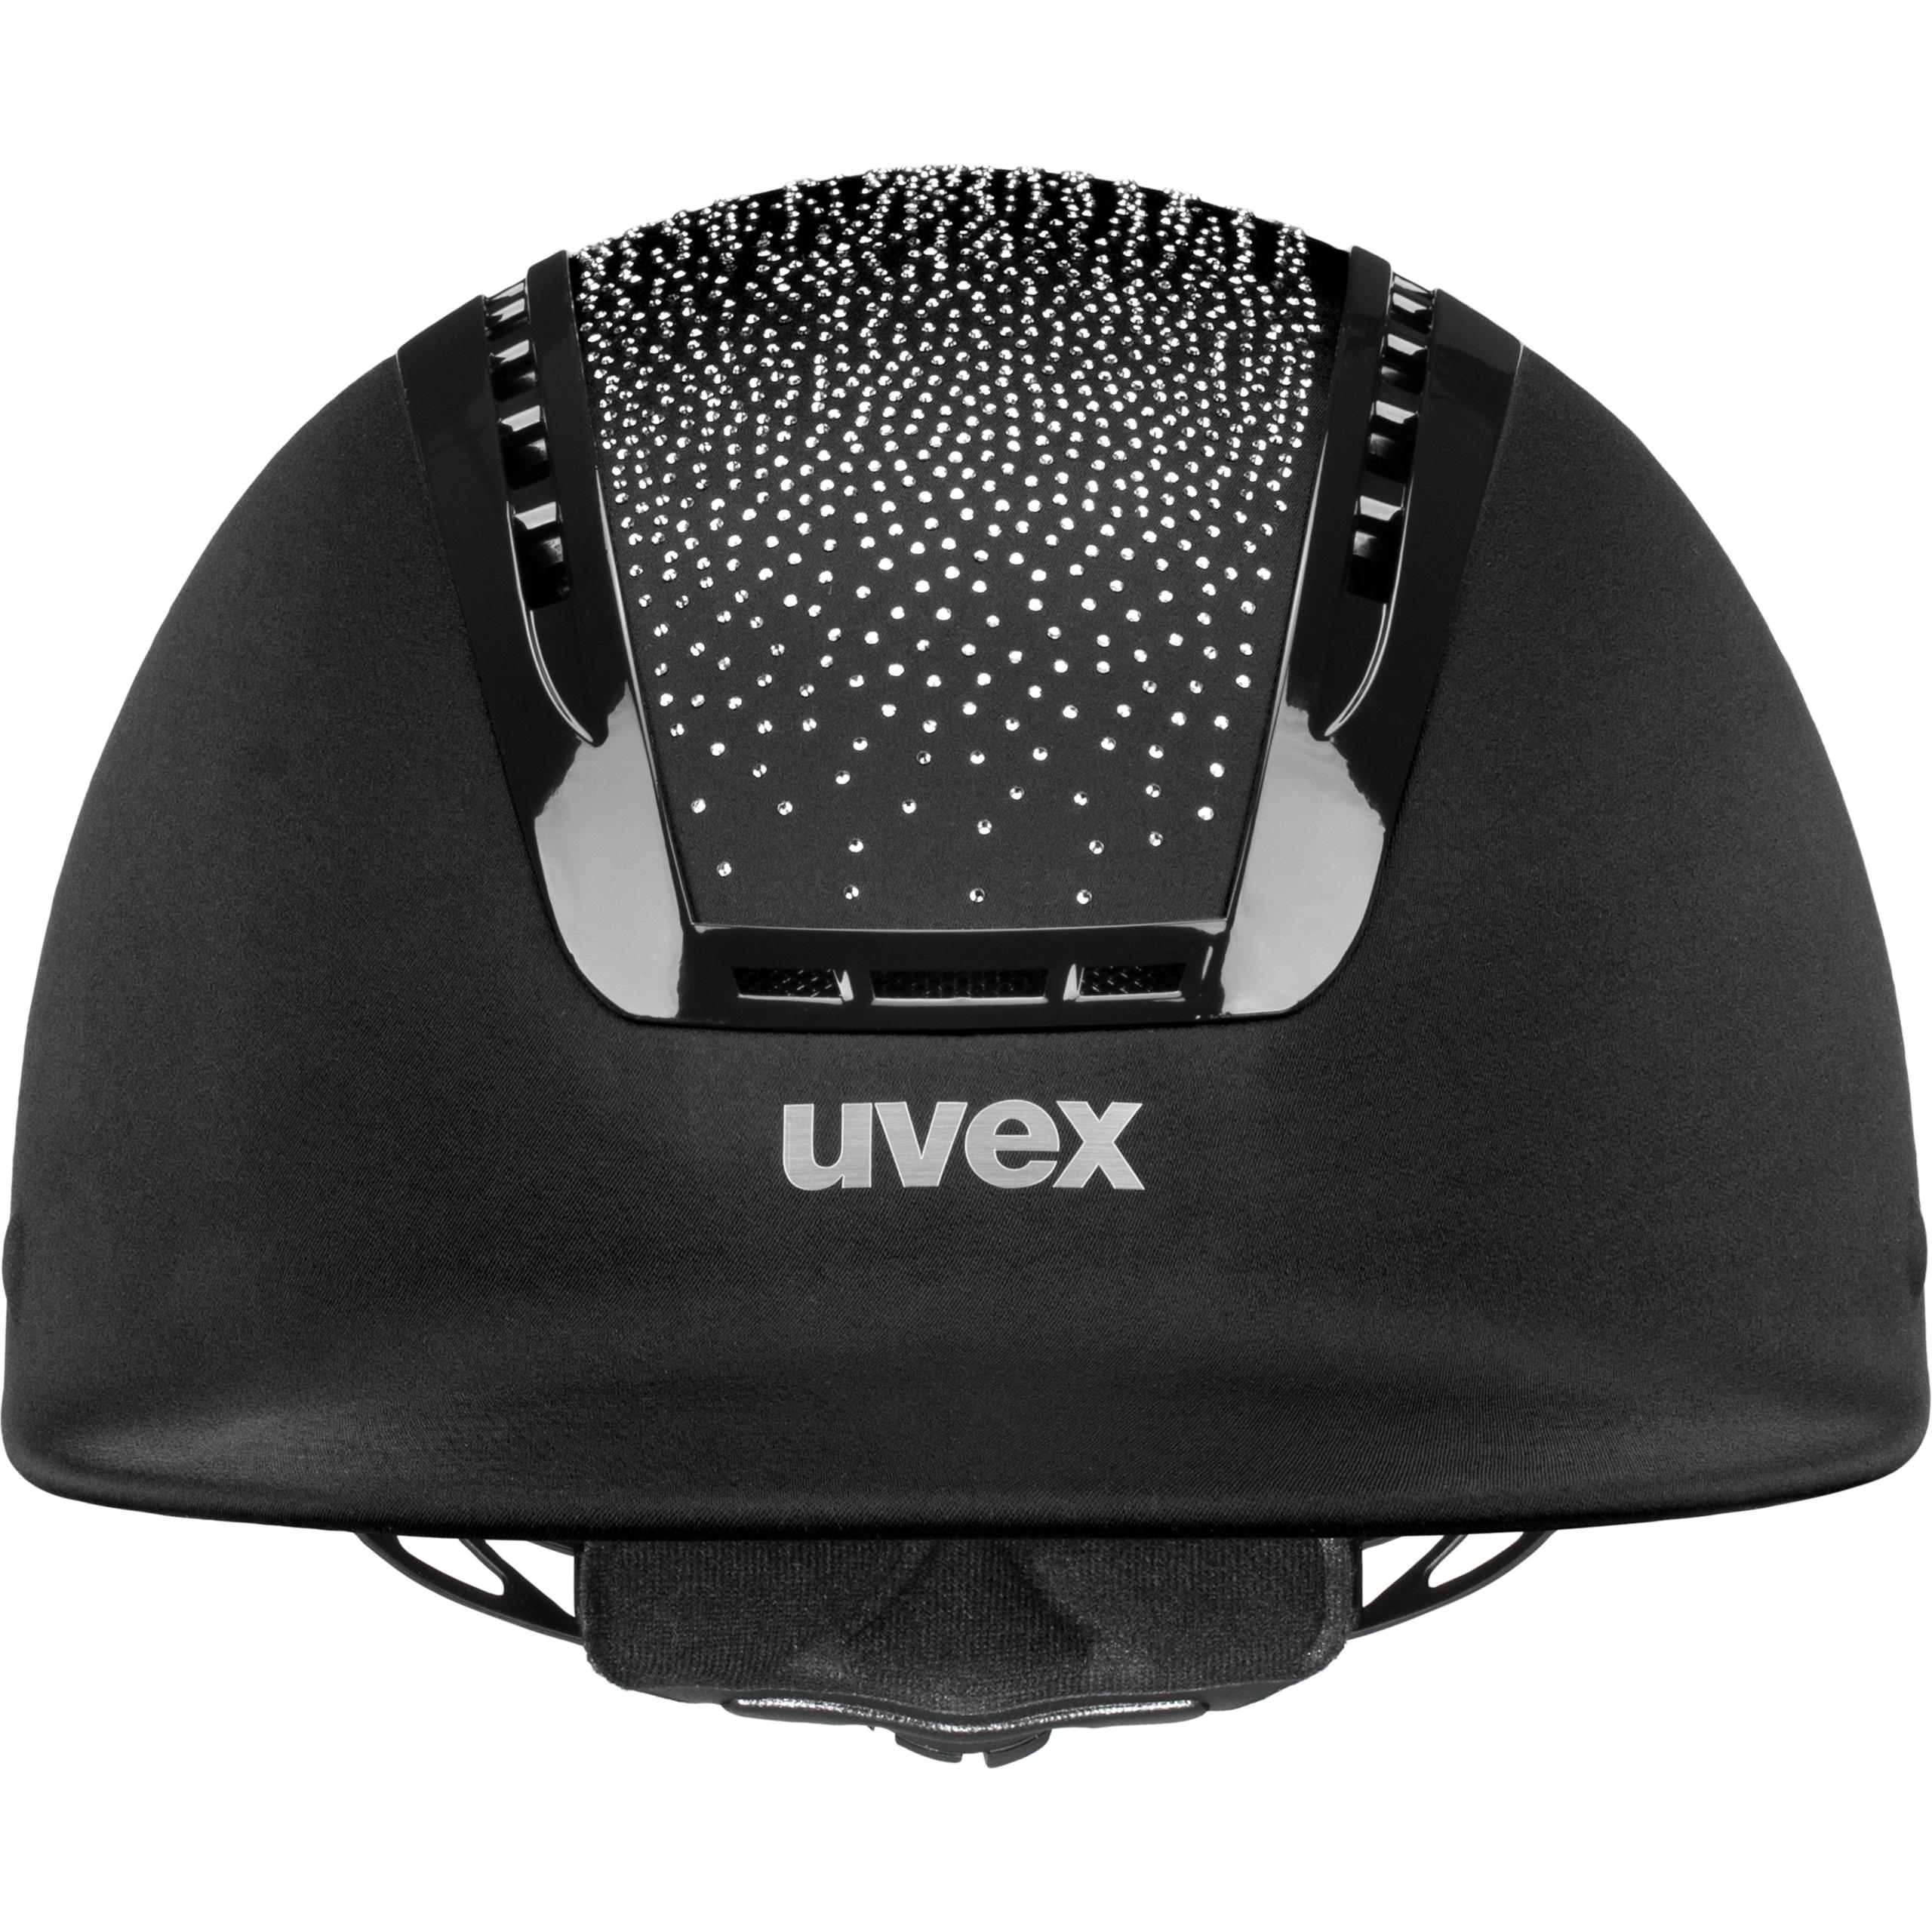 Uvex SUXXEED CHROME Riding Helmet Adjustable Hat Kite VG1 Black/Navy/Silver XS-L 